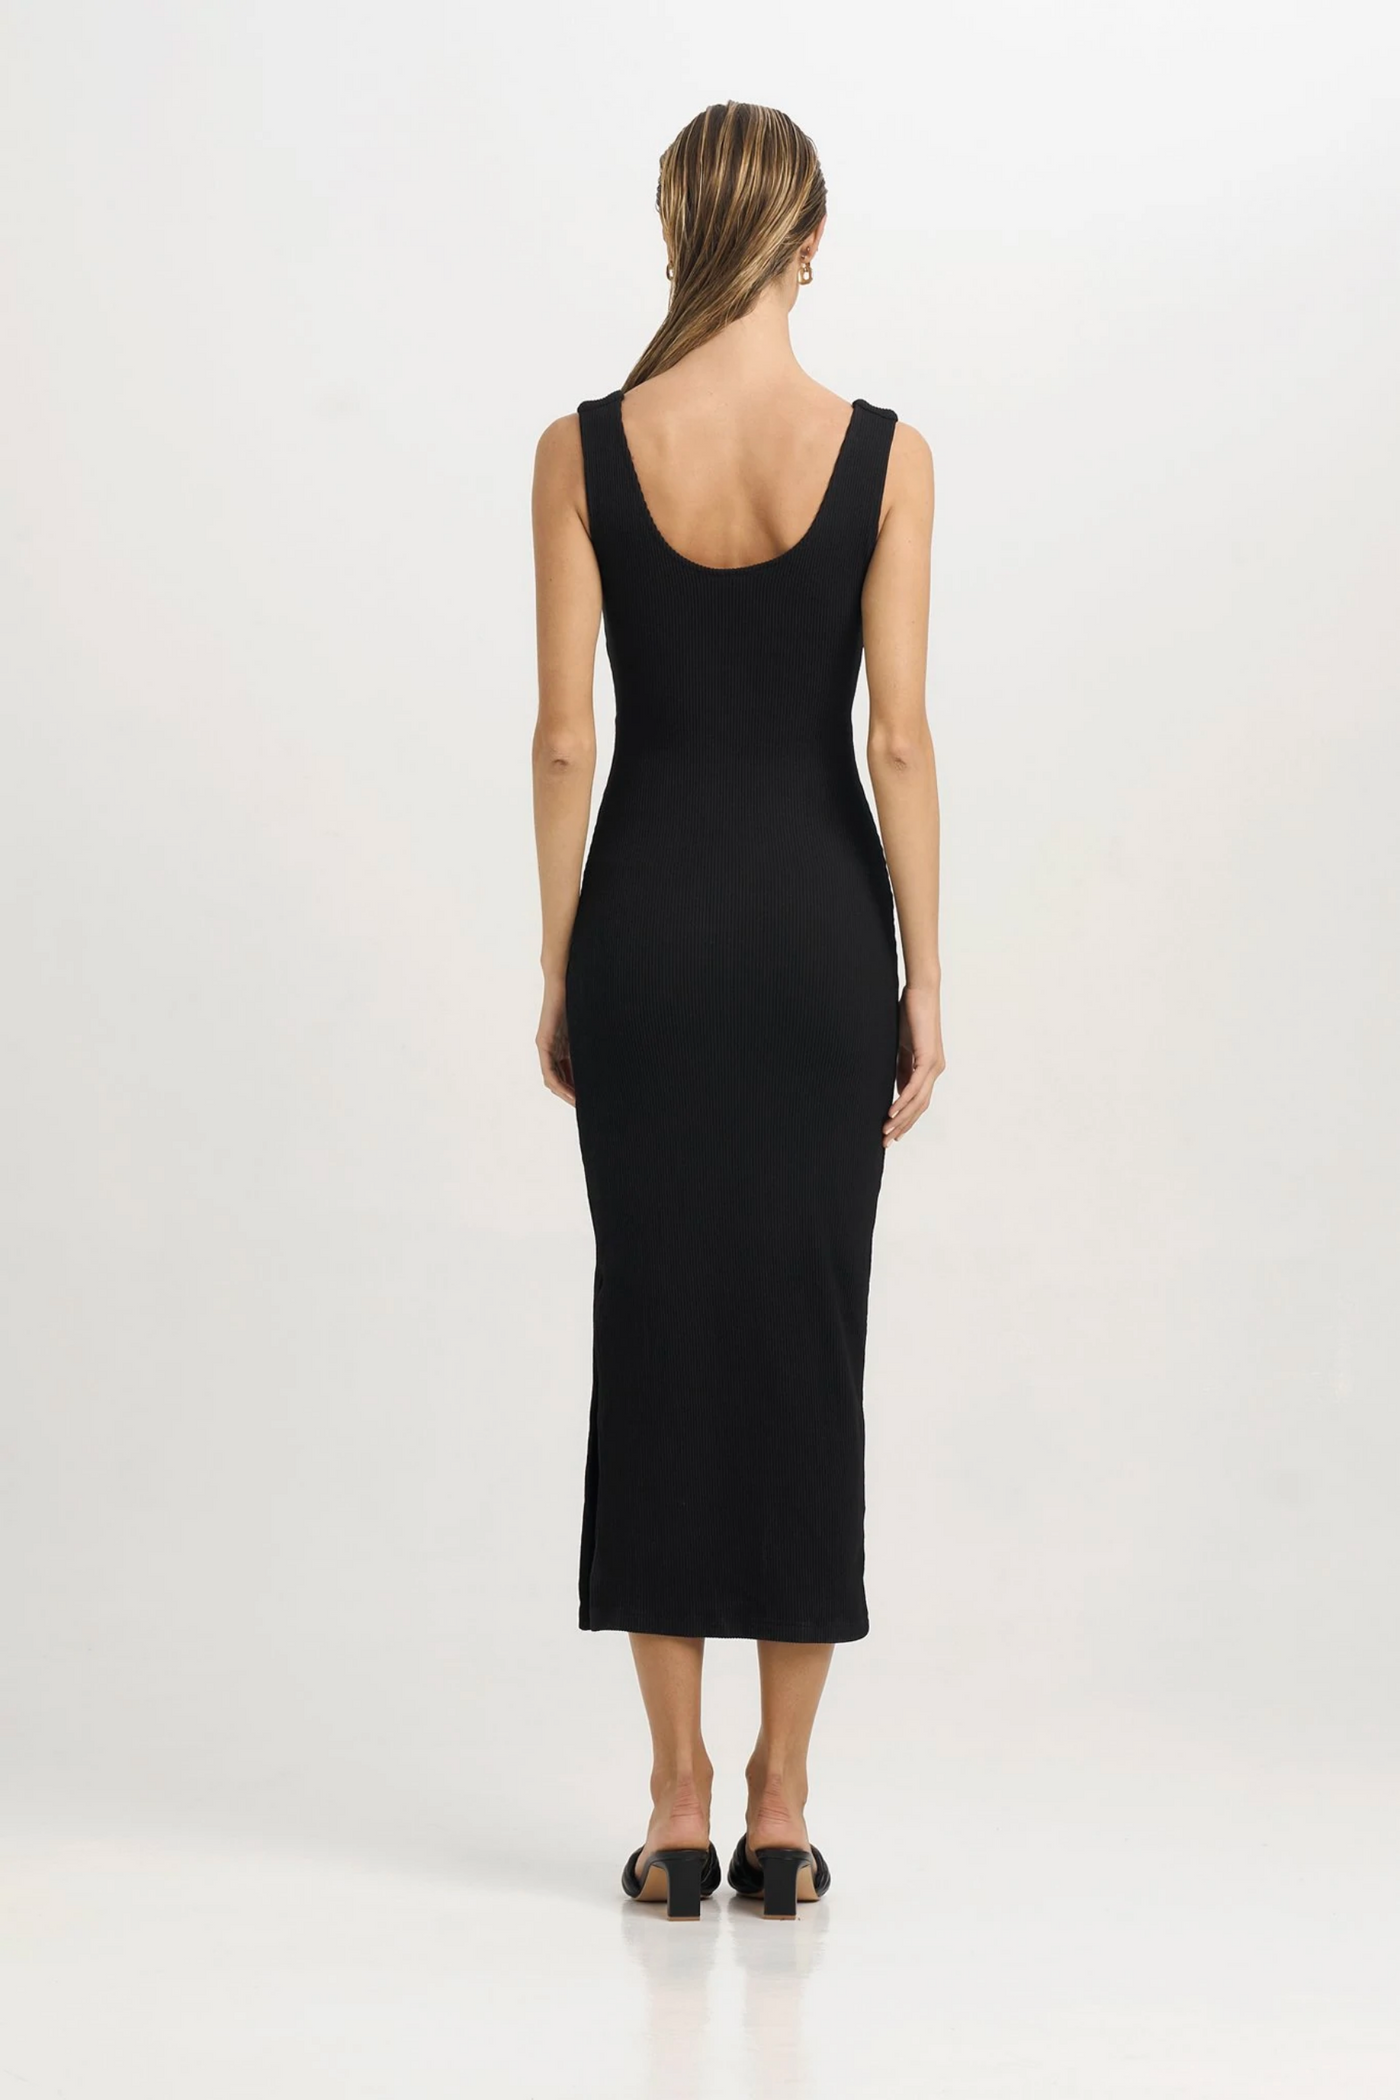 Sans Faff Natasha Reversi Dress in Black, available on ZERRIN with free Singapore shipping